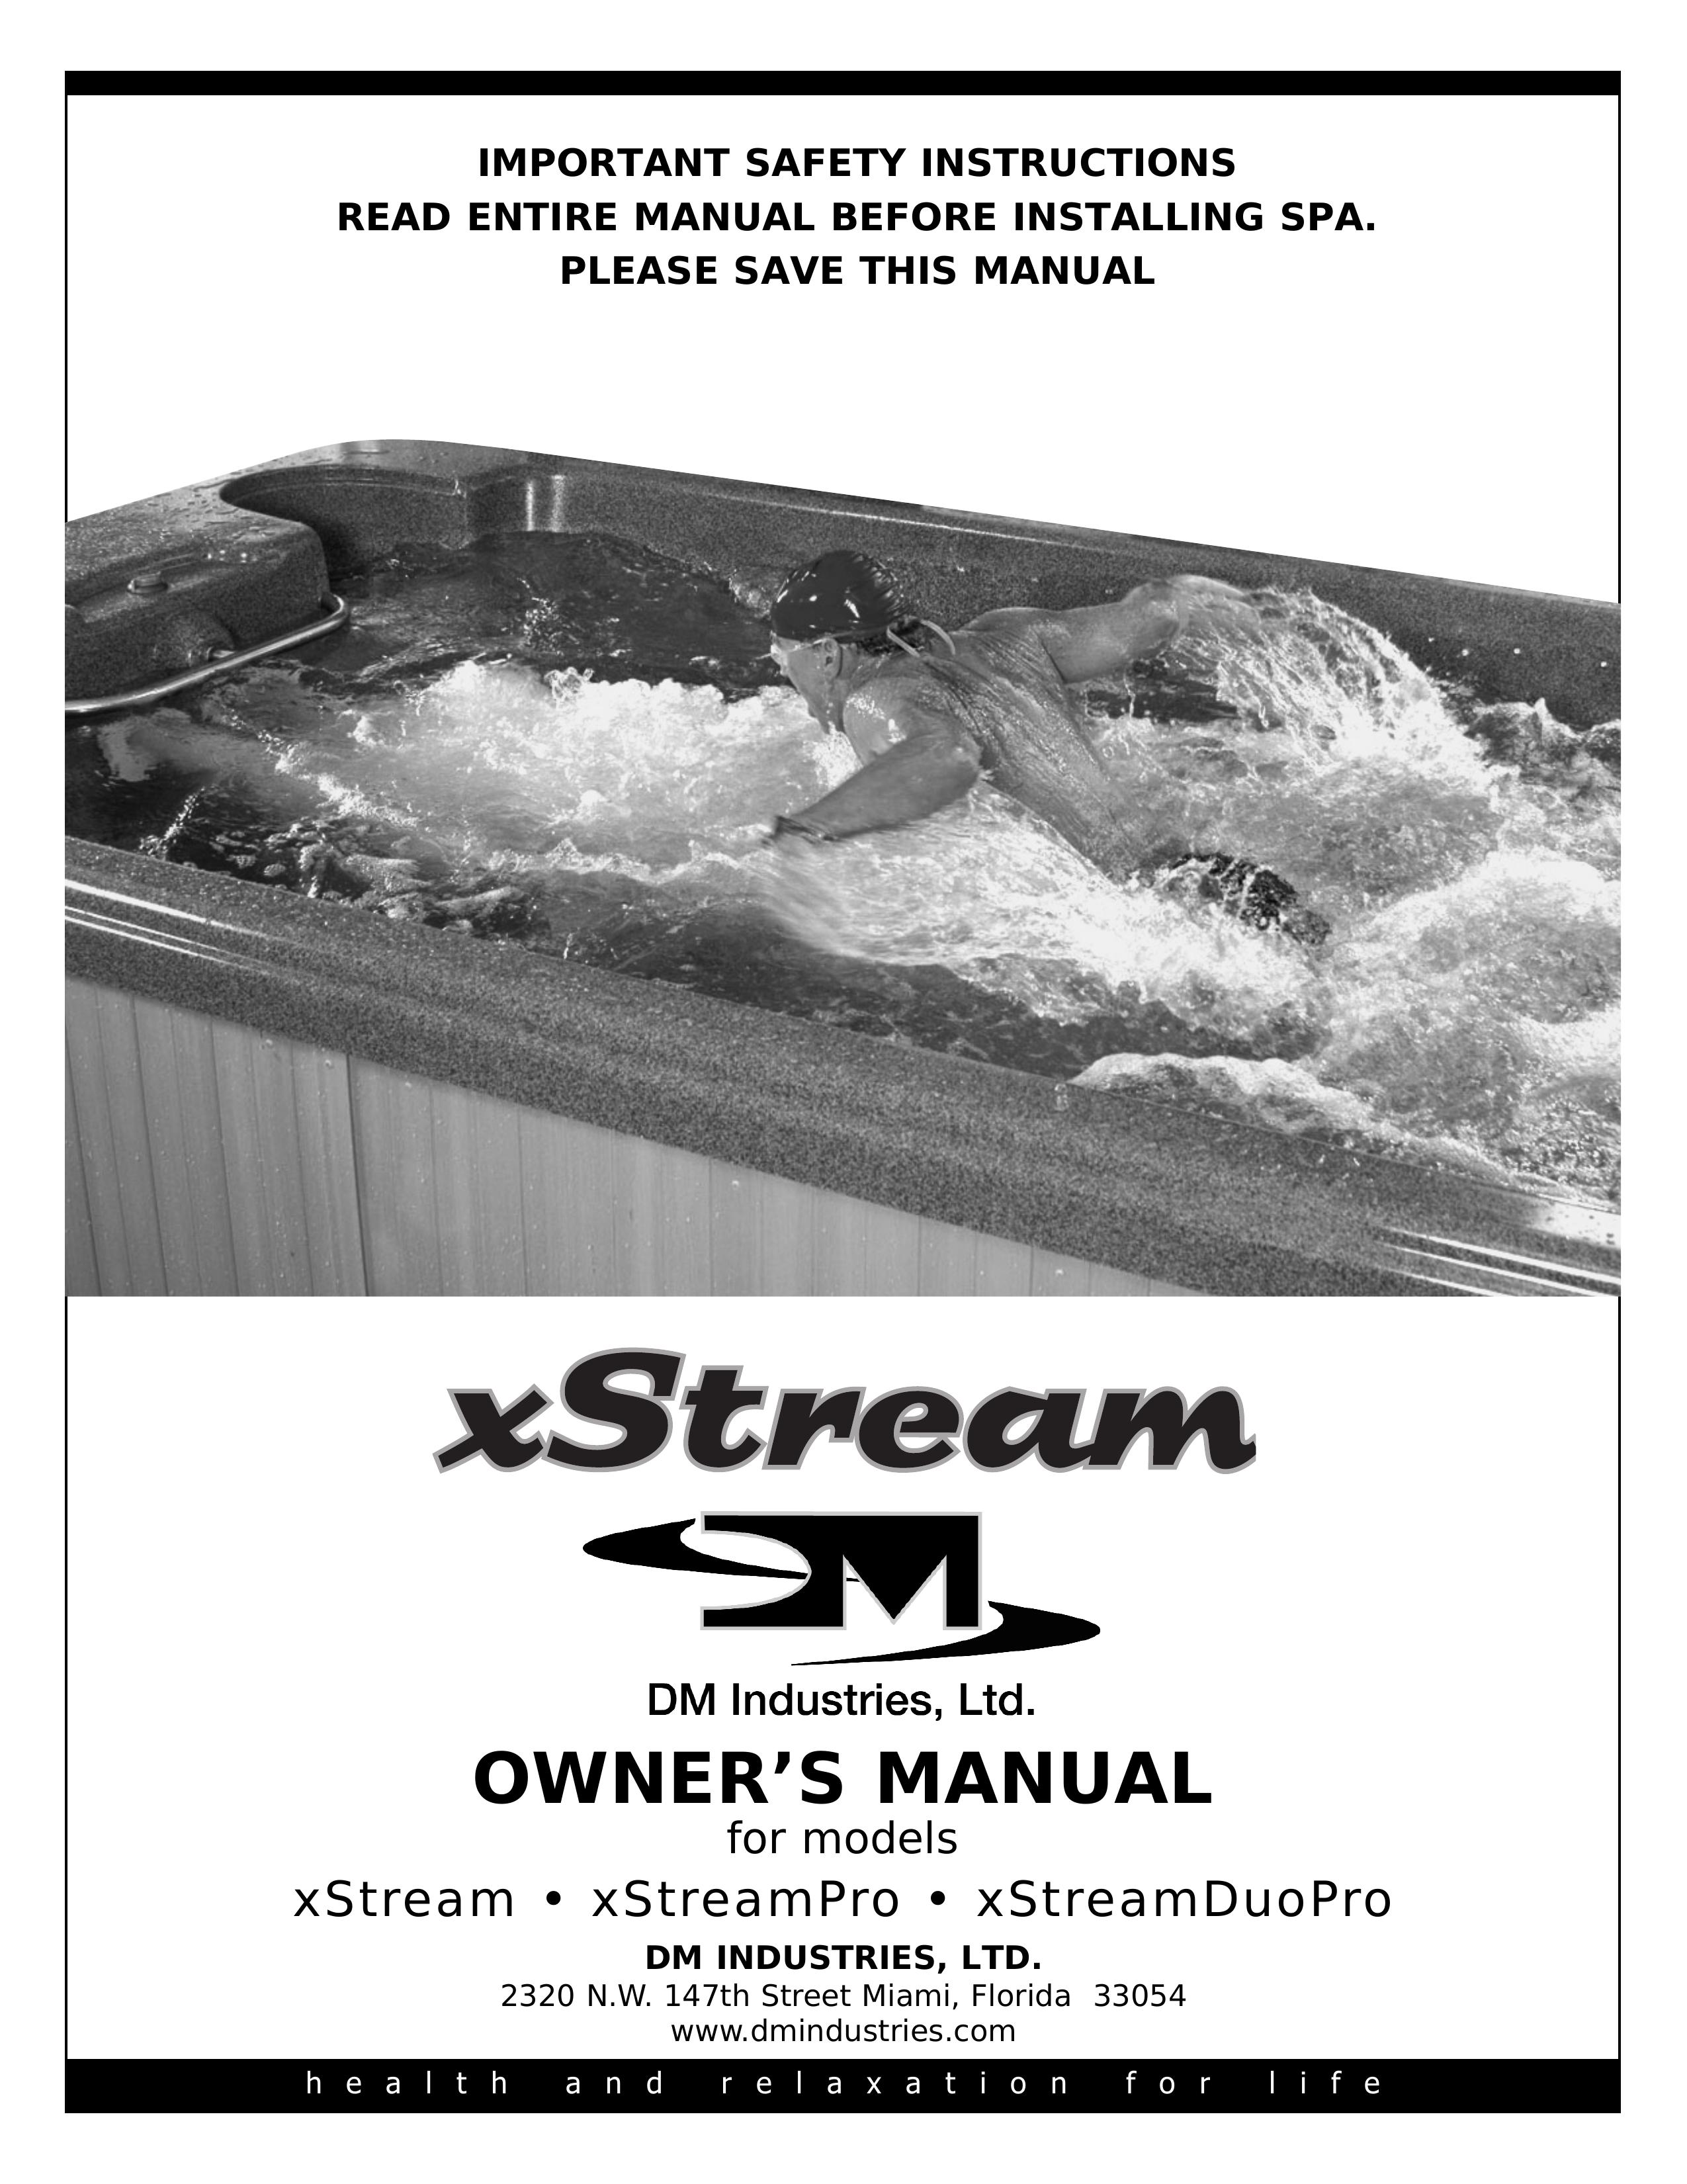 Vita Spa xStream Hot Tub User Manual